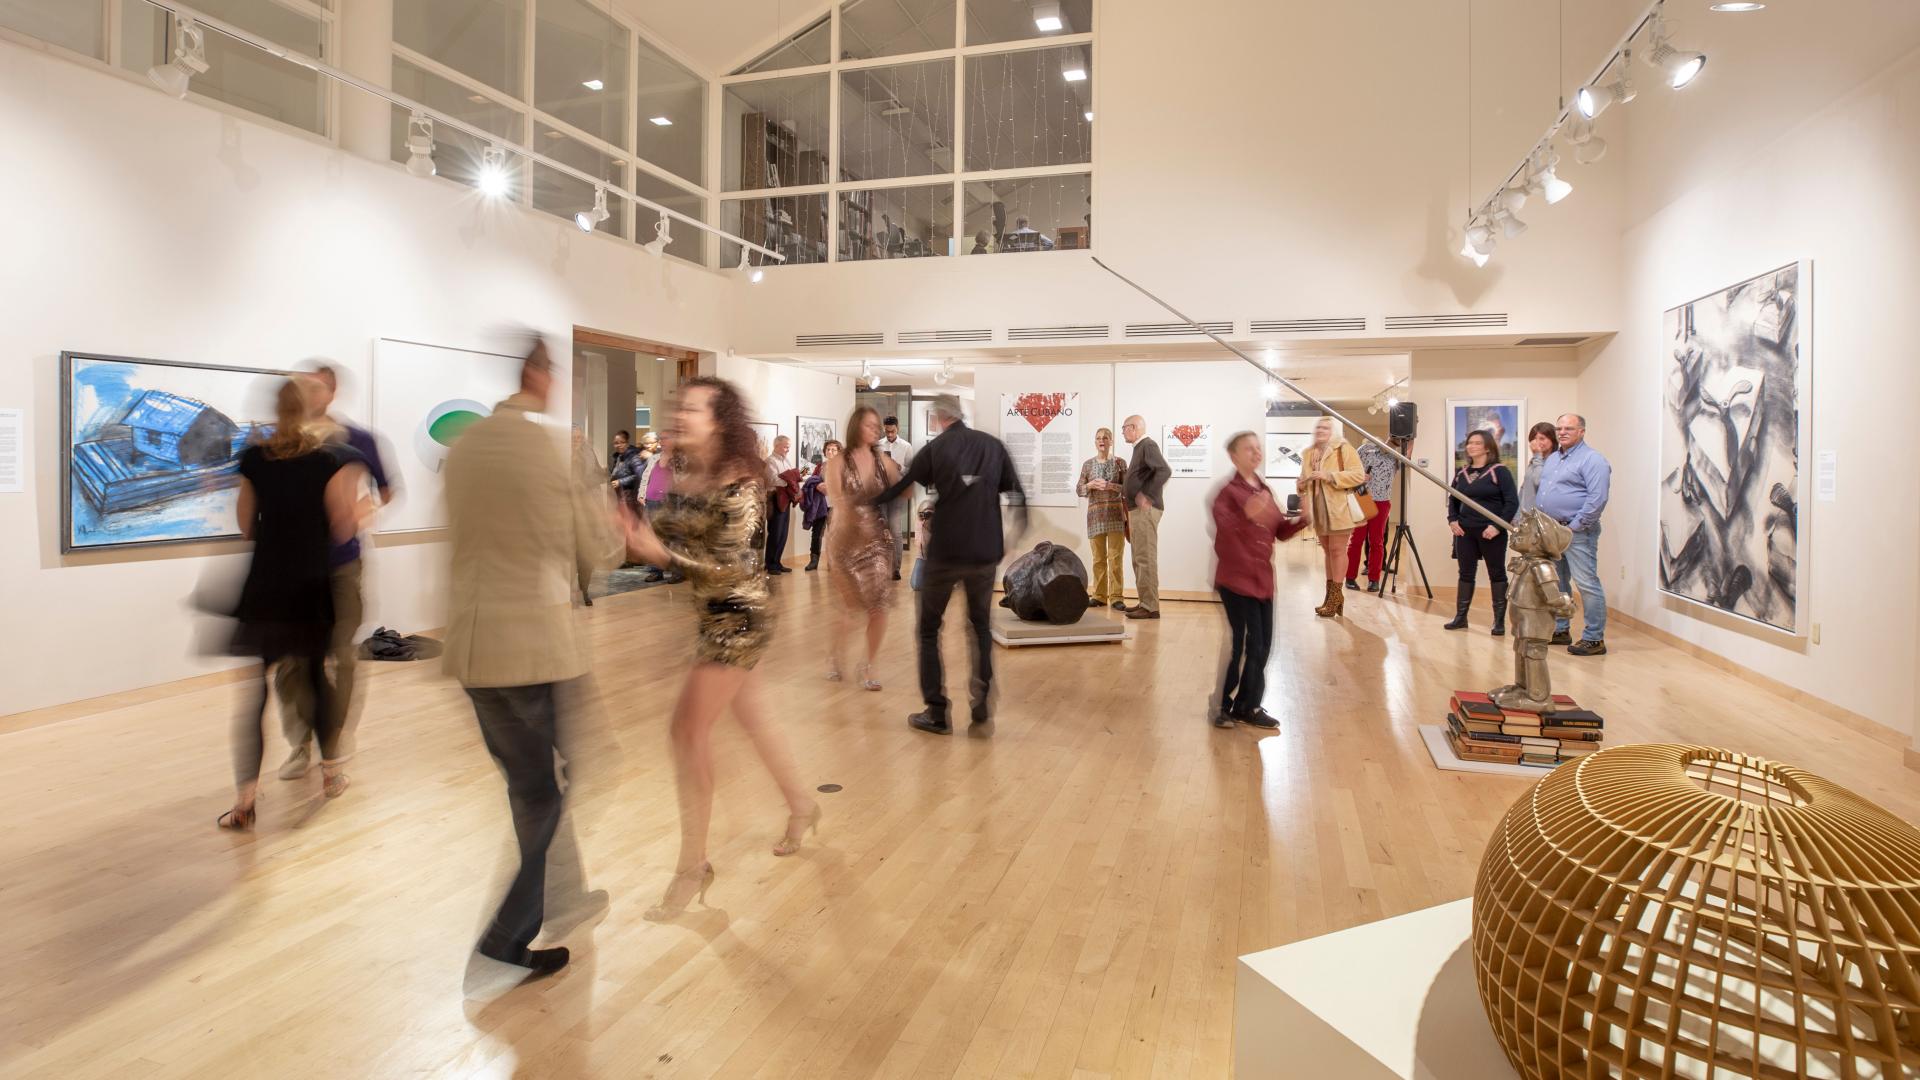 Krasl Art Center- a group of people dancing in an art gallery